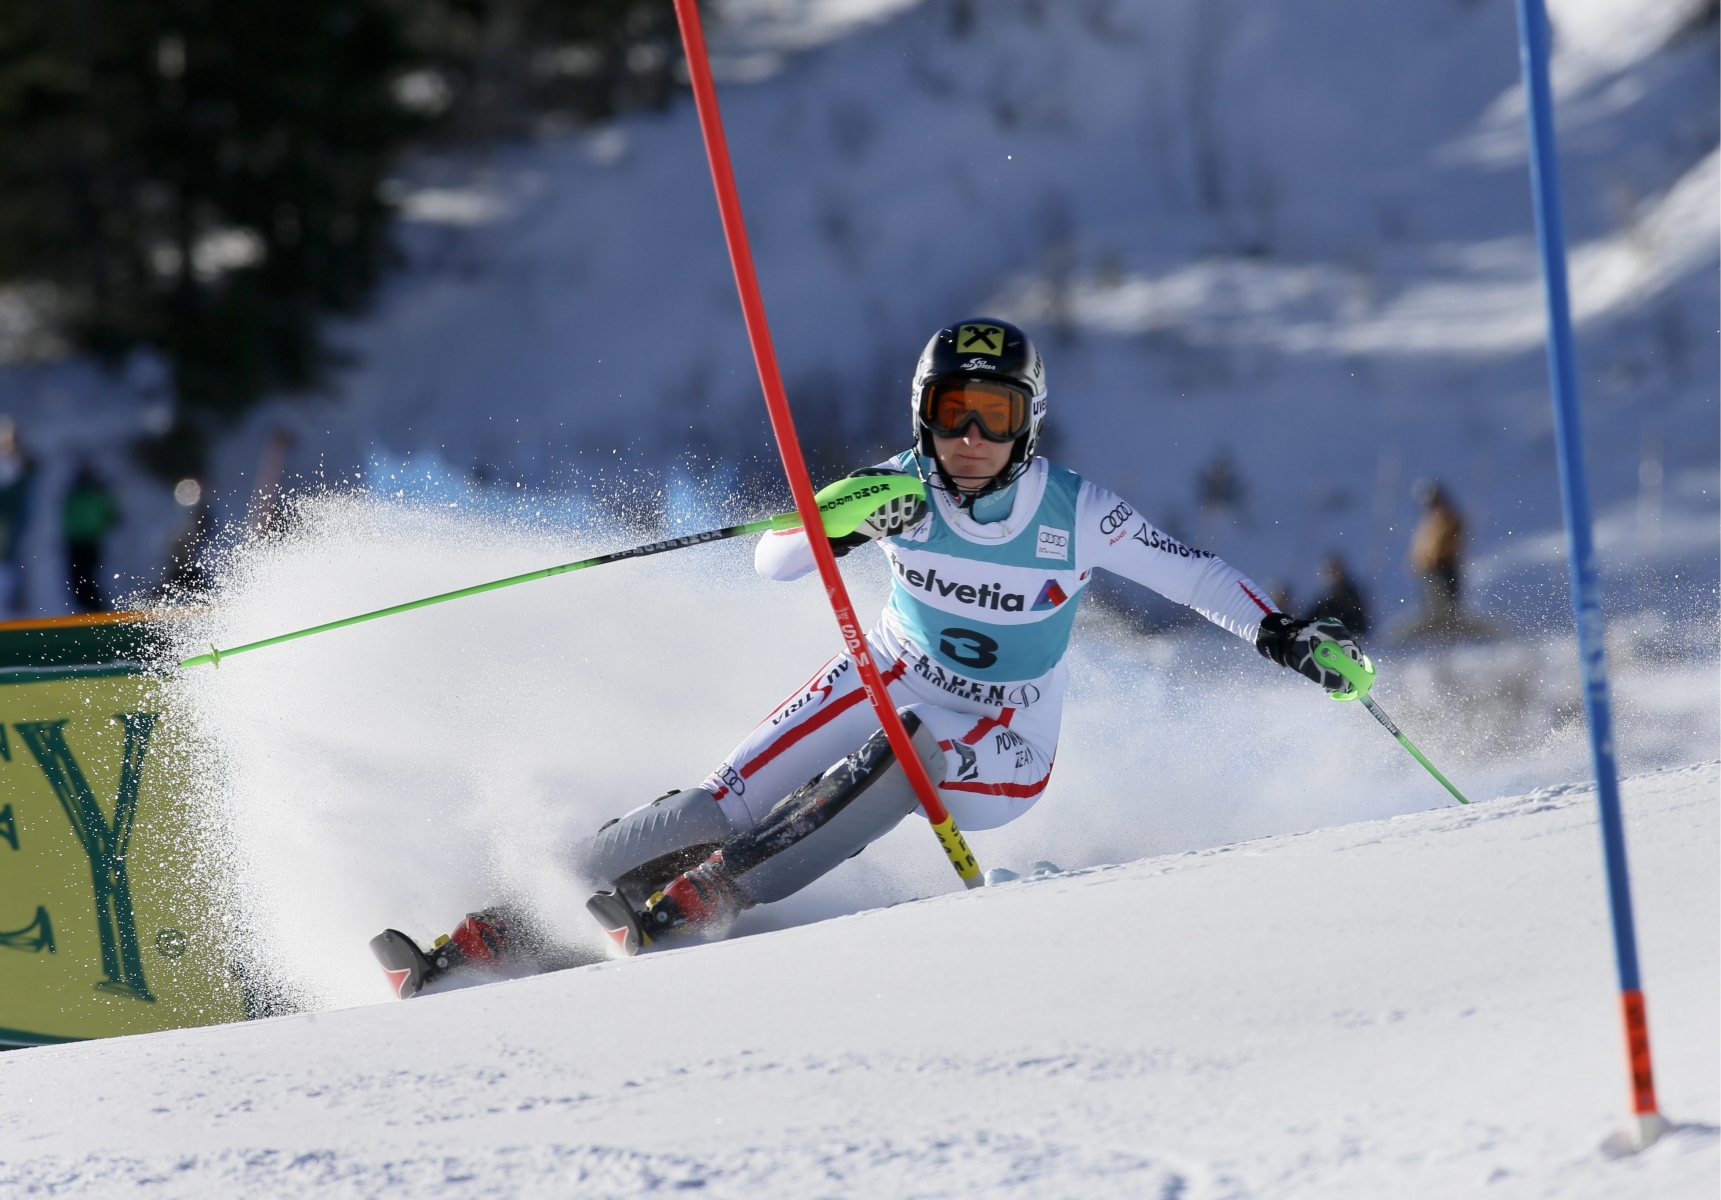 Austria's Kathrin Zettel speeds down the course during the women's World Cup slalom ski race in Aspen, Colo., on Sunday, Nov. 25, 2012.  (AP Photo/Nathan Bilow)